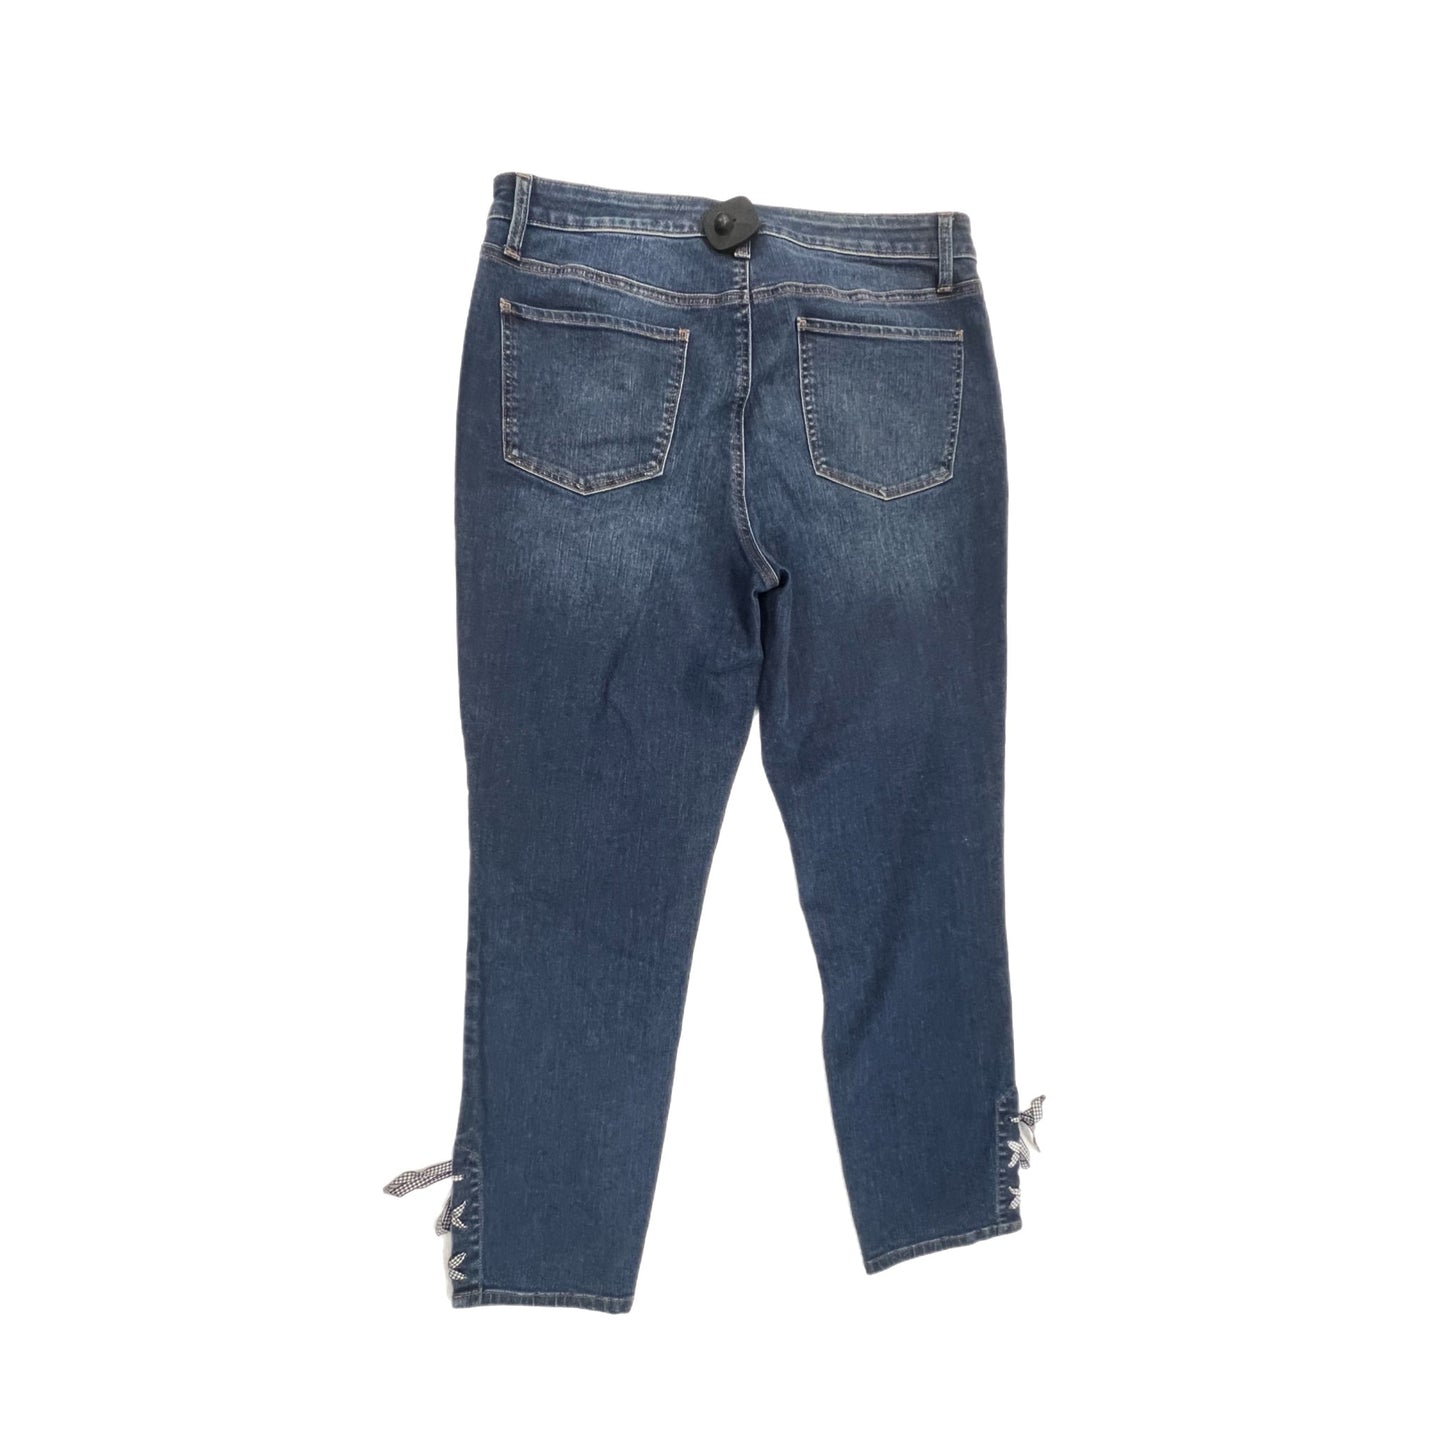 Jeans Skinny By Talbots  Size: 12